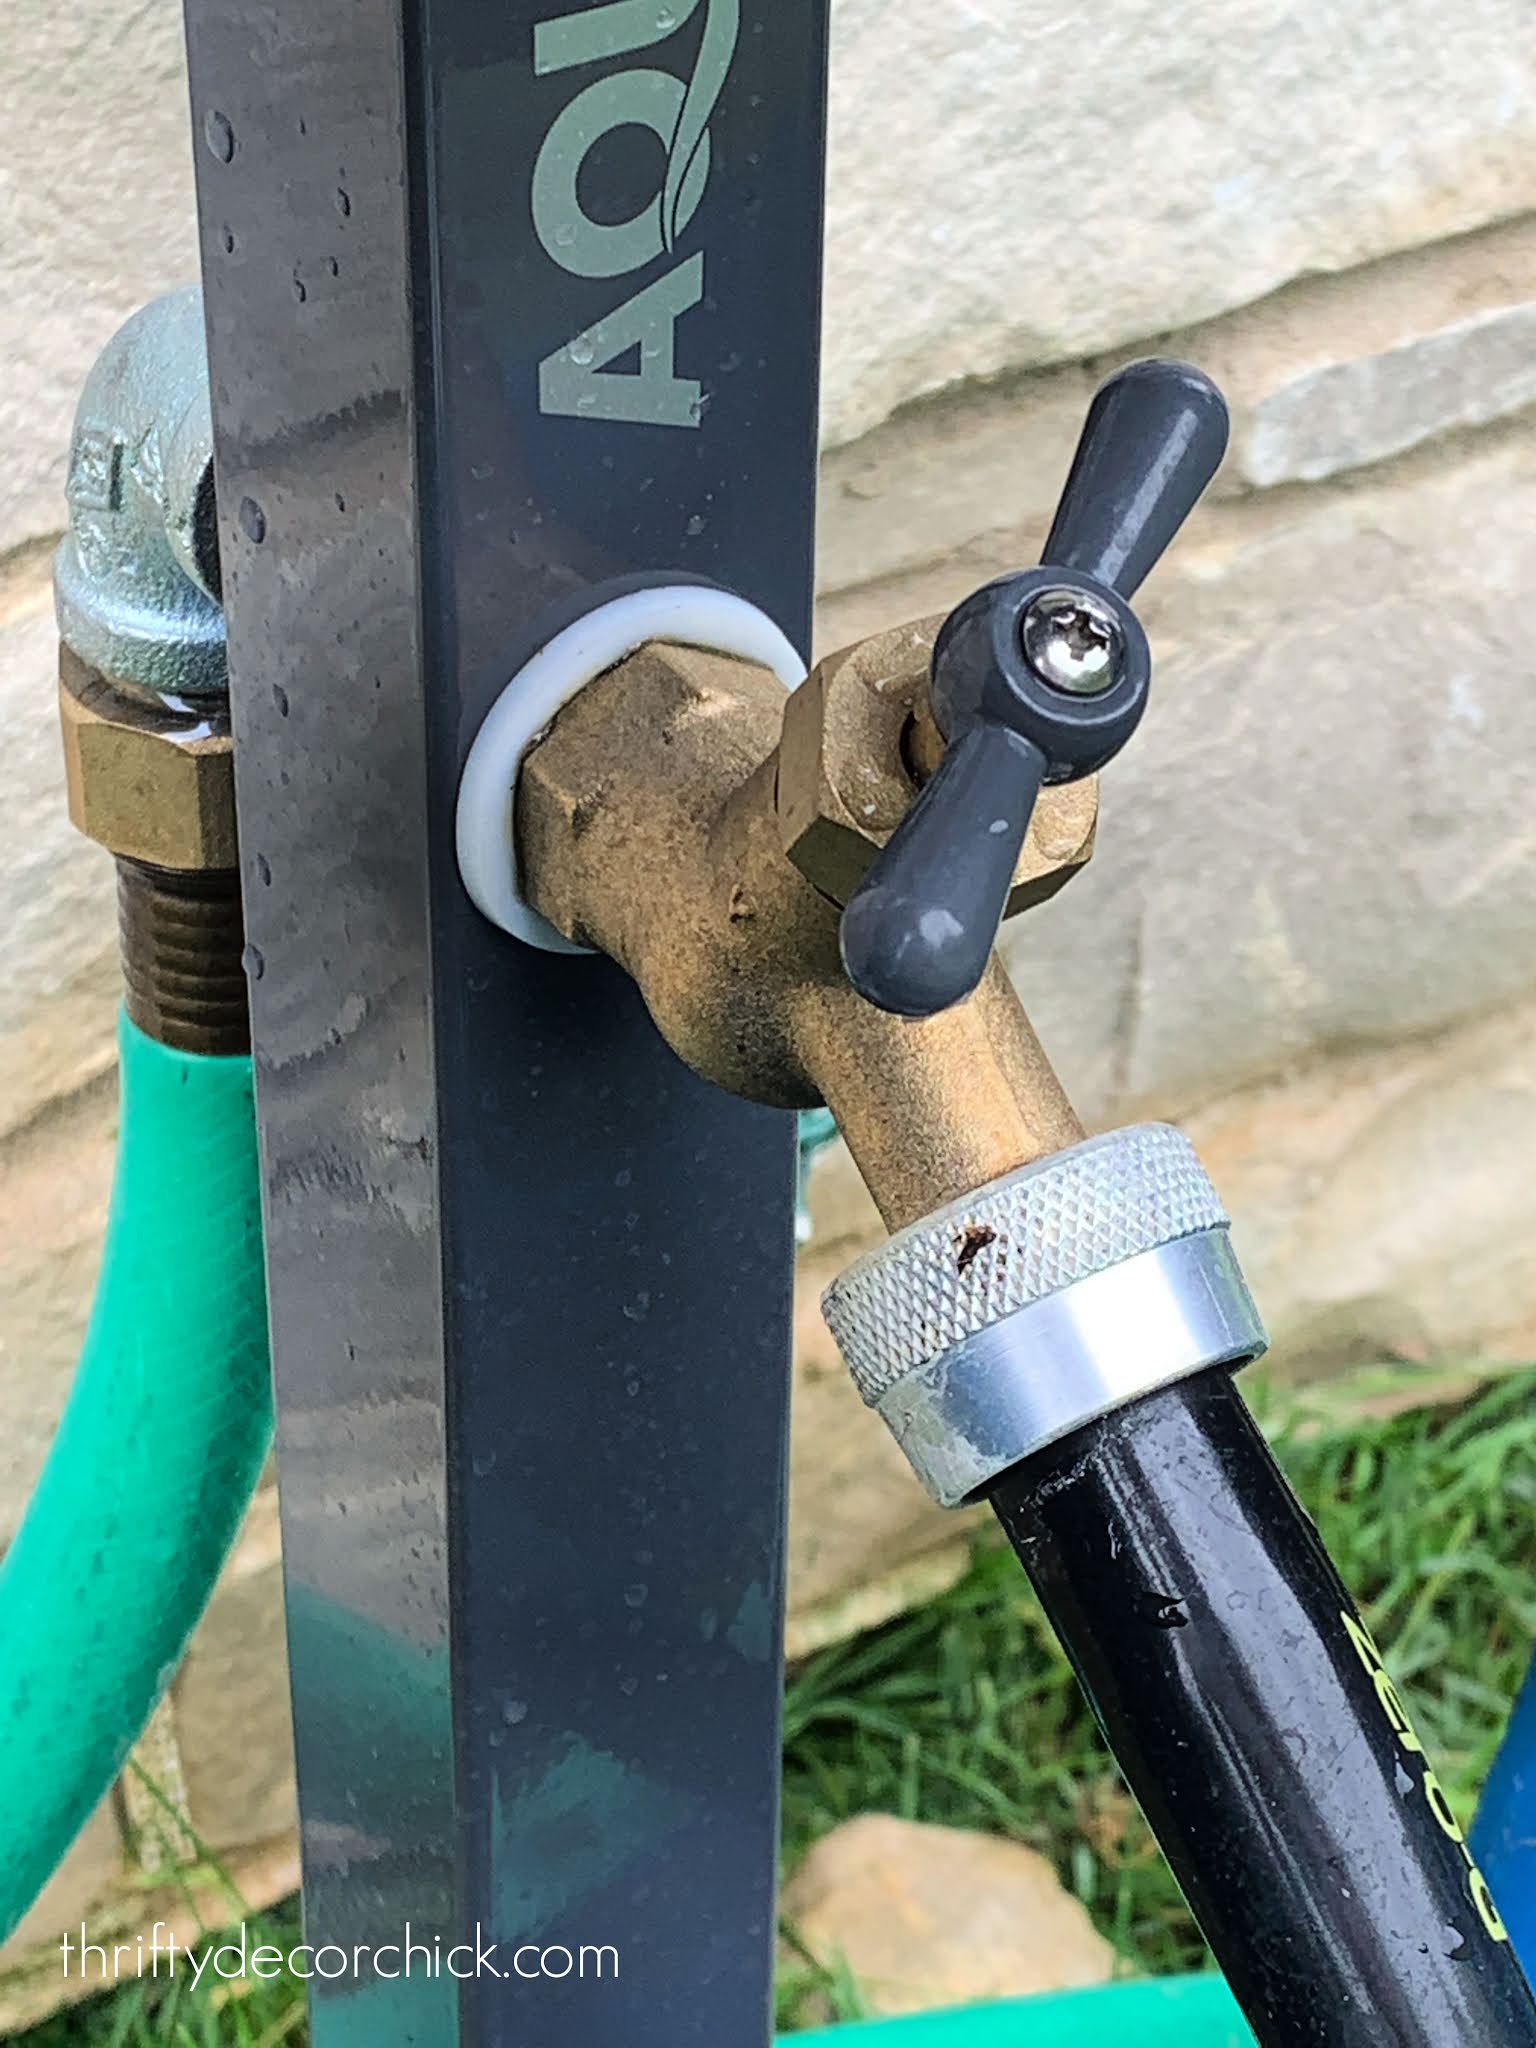 extend and raise hose bib